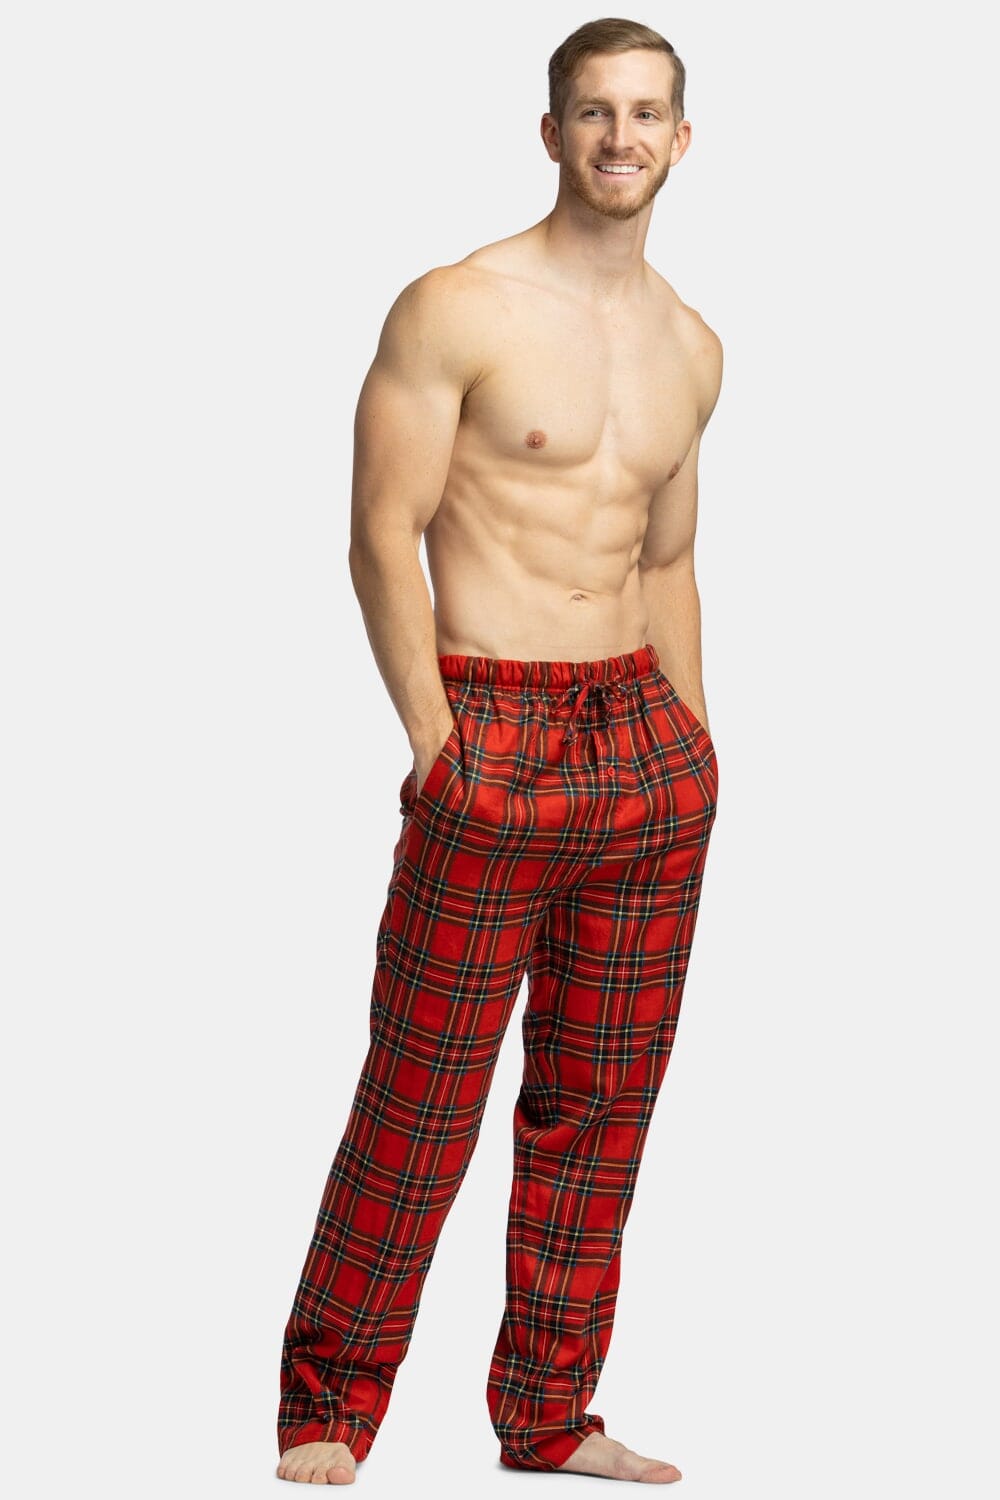 Buy Gap Christmas Flannel Pyjama Bottoms from the Gap online shop